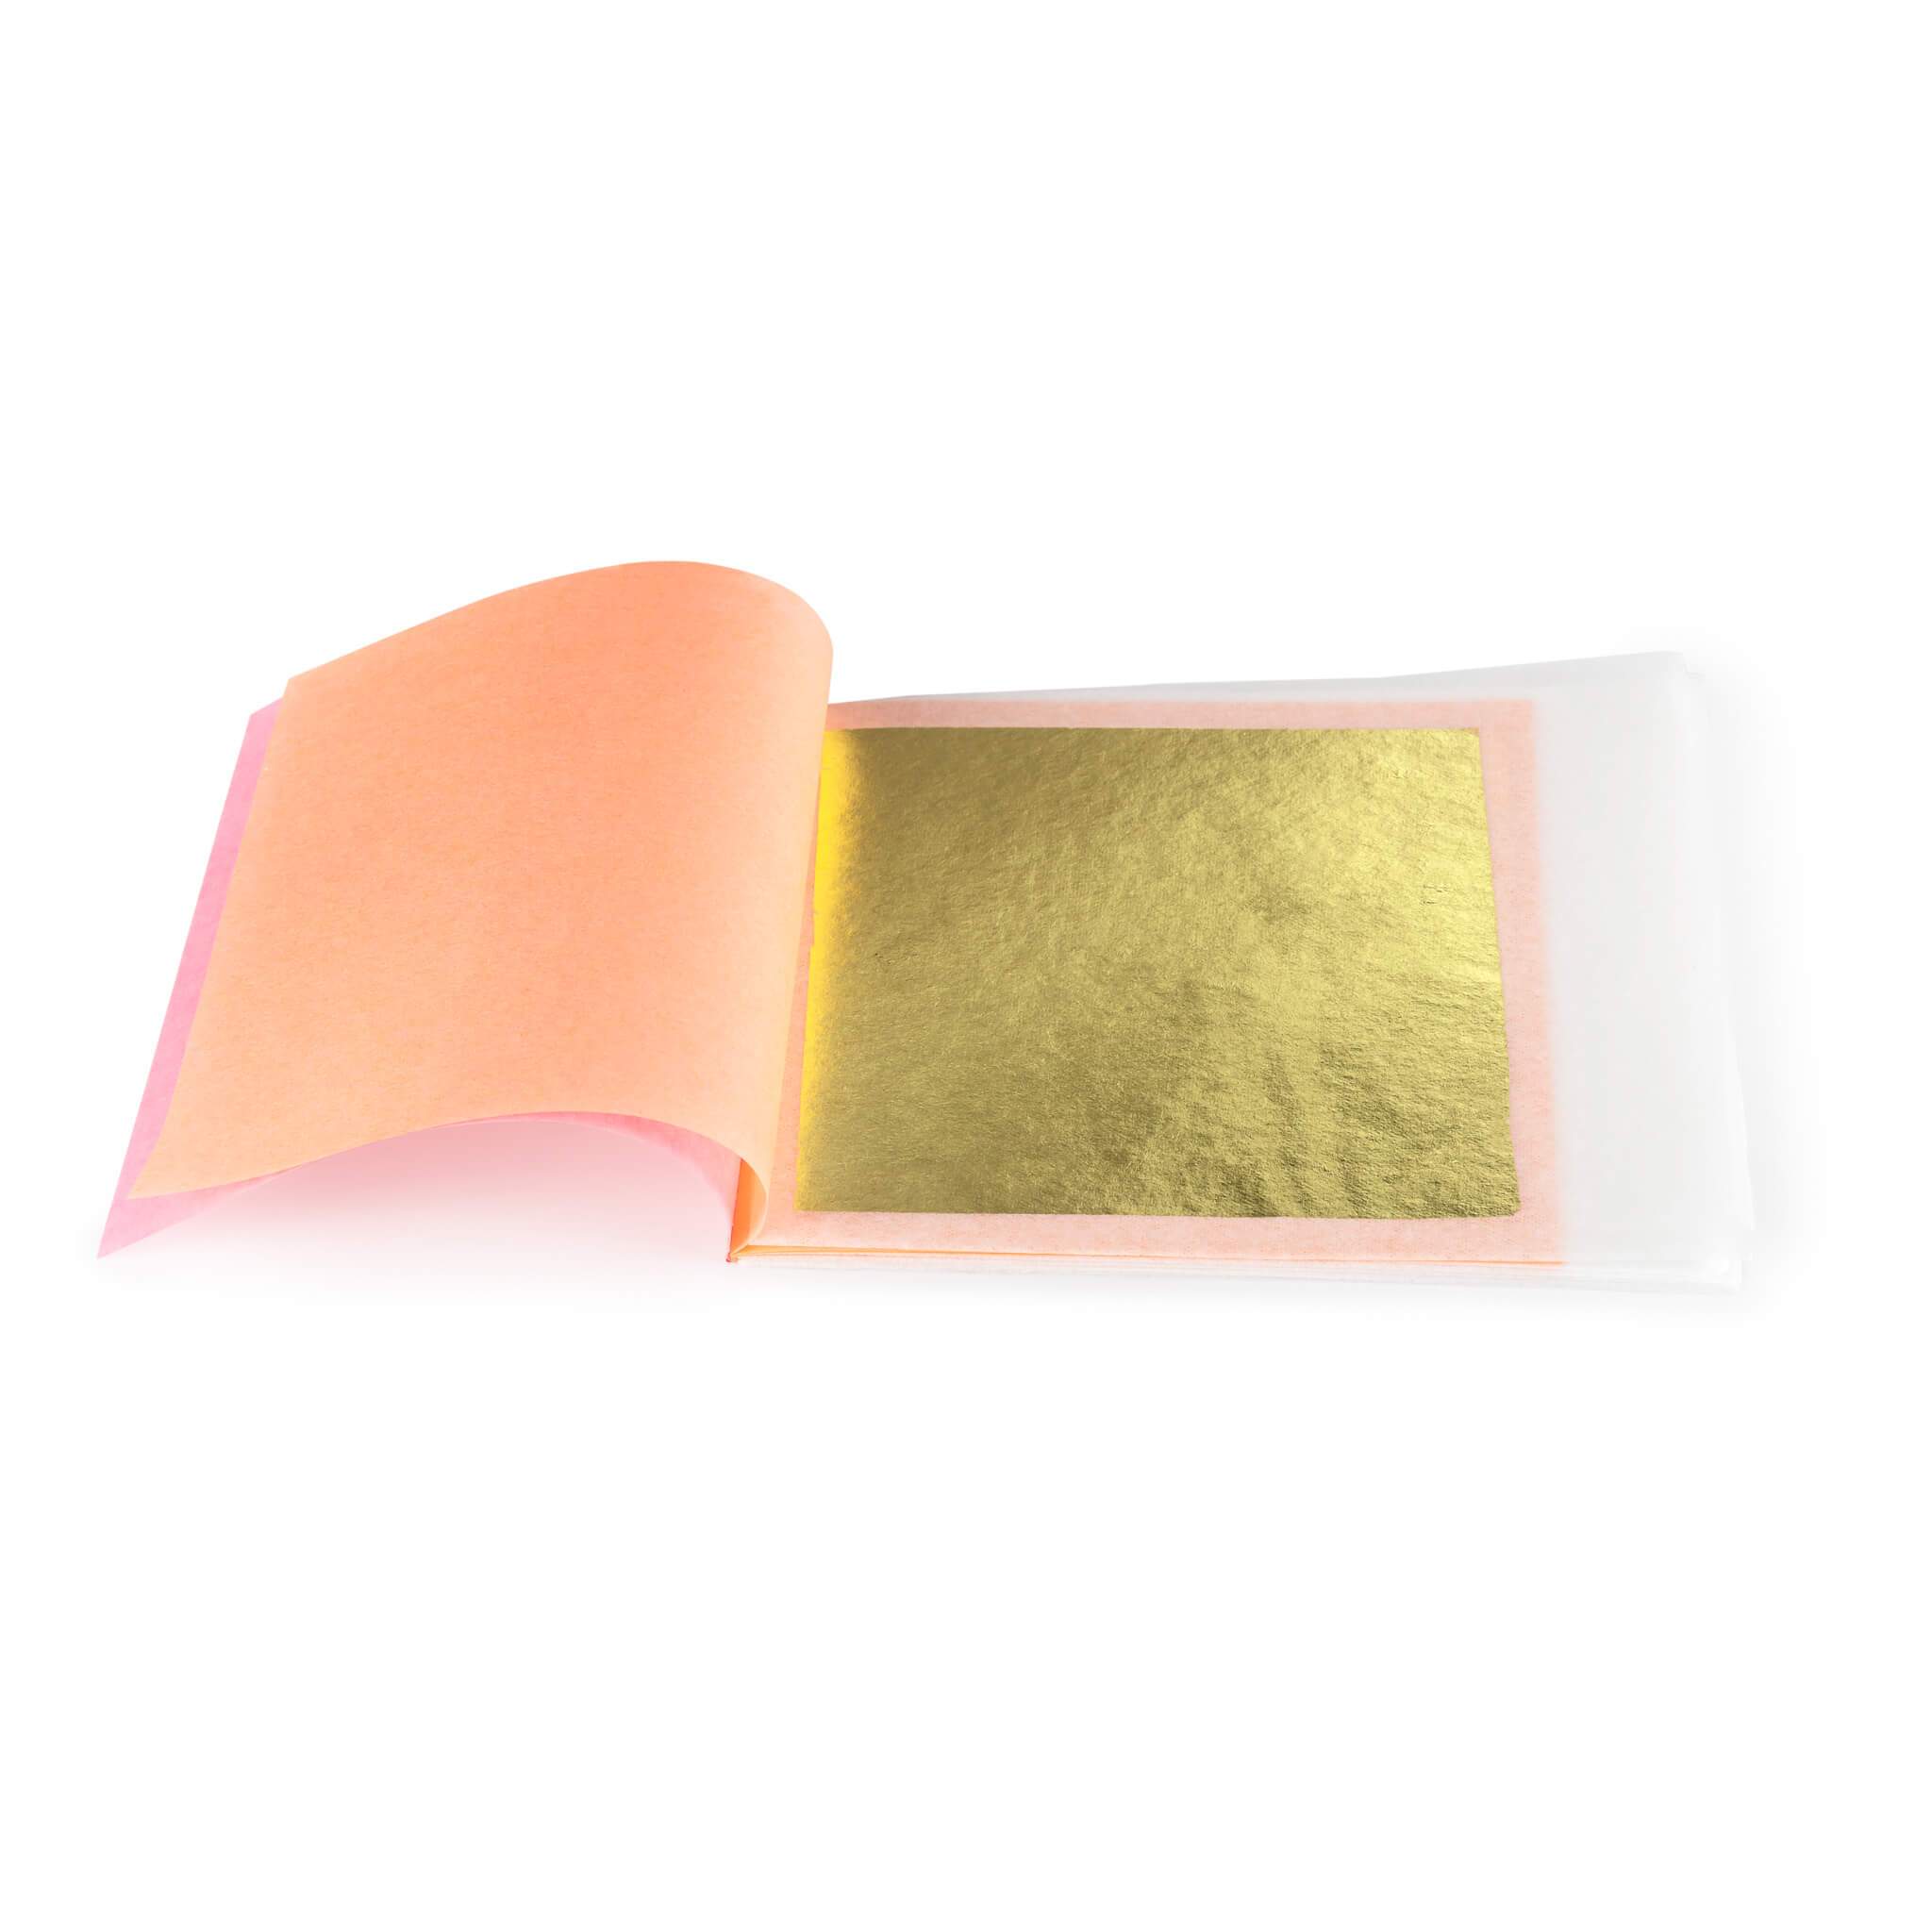 Slofoodgroup - 24 Karat Edible Gold Leaf Loose Sheets - 10 Sheets